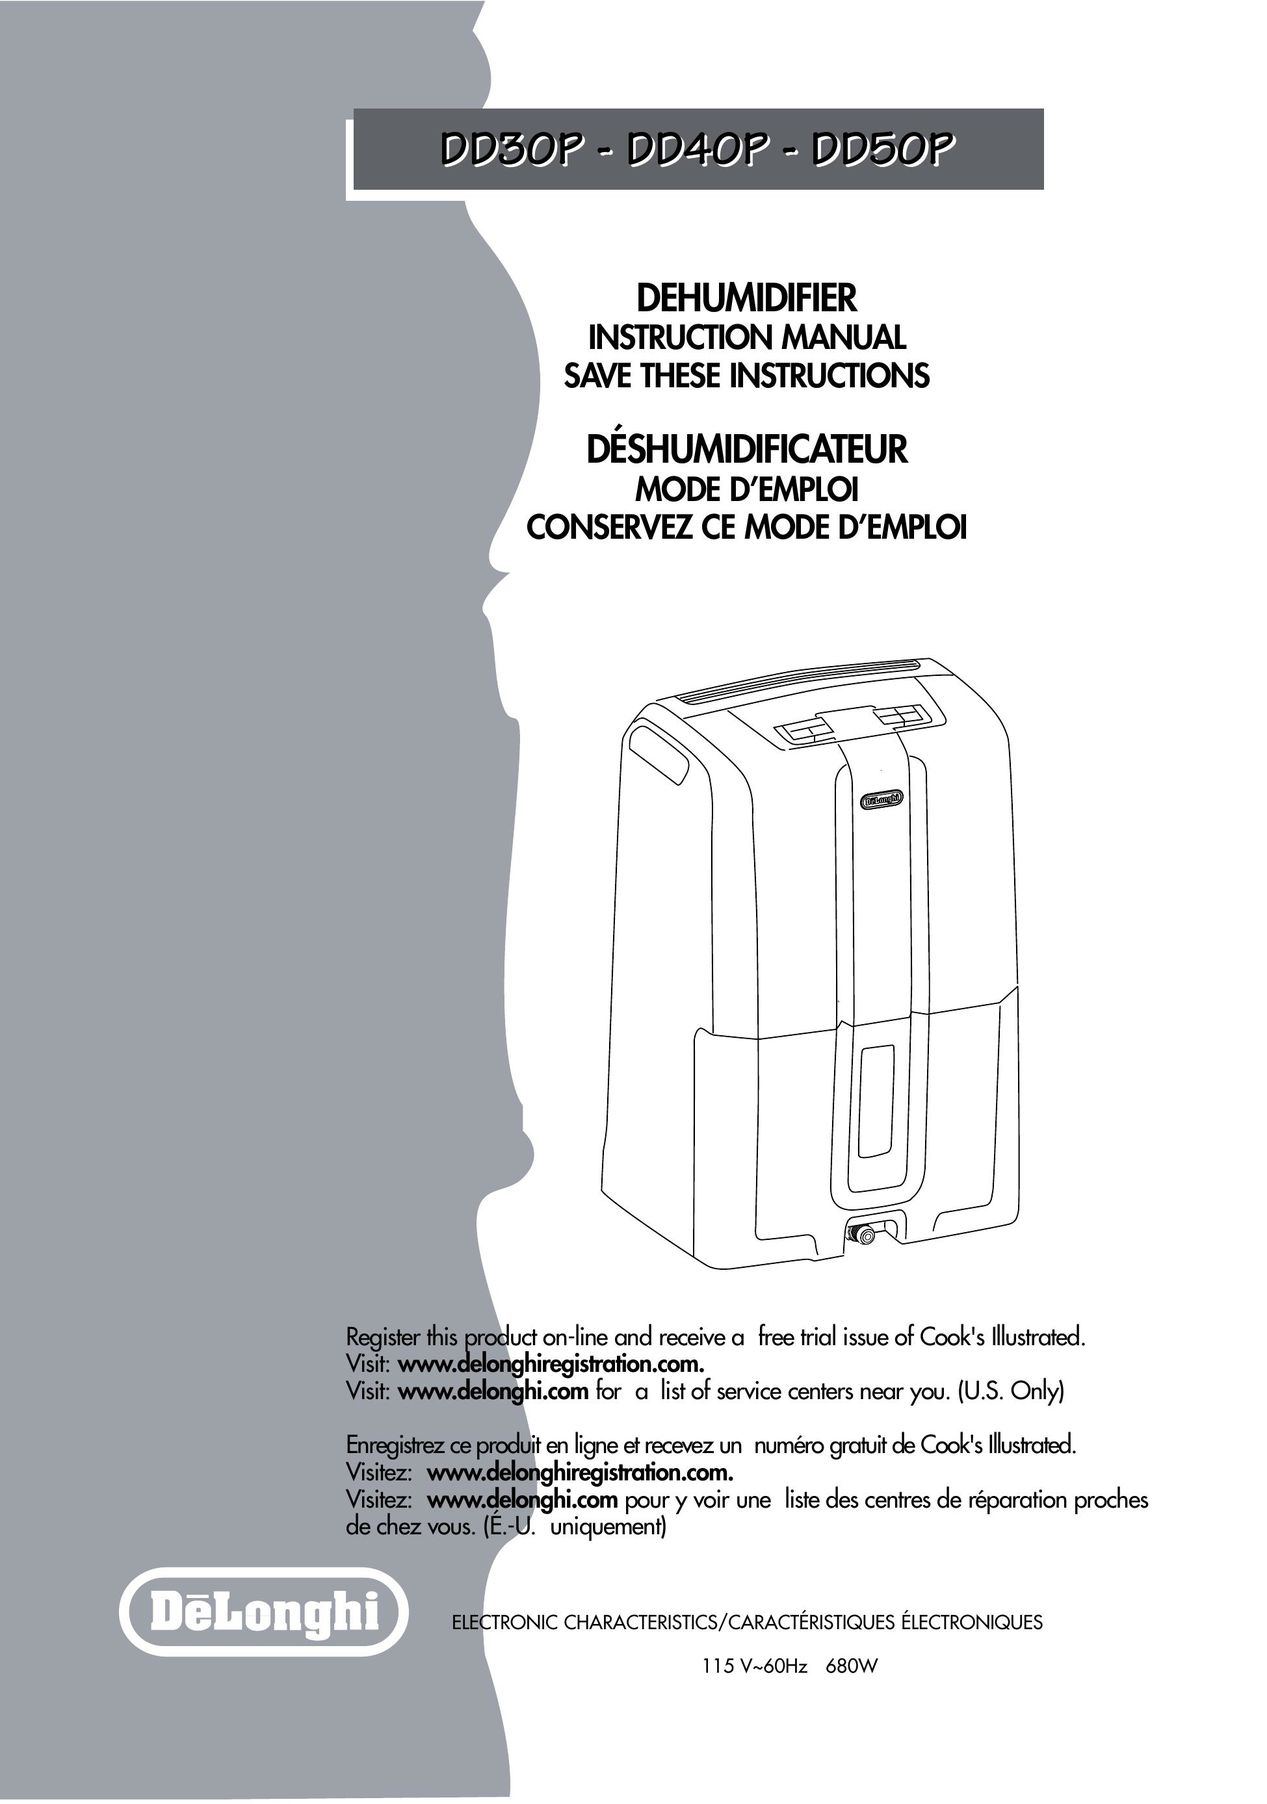 DeLonghi DD30P Dehumidifier User Manual